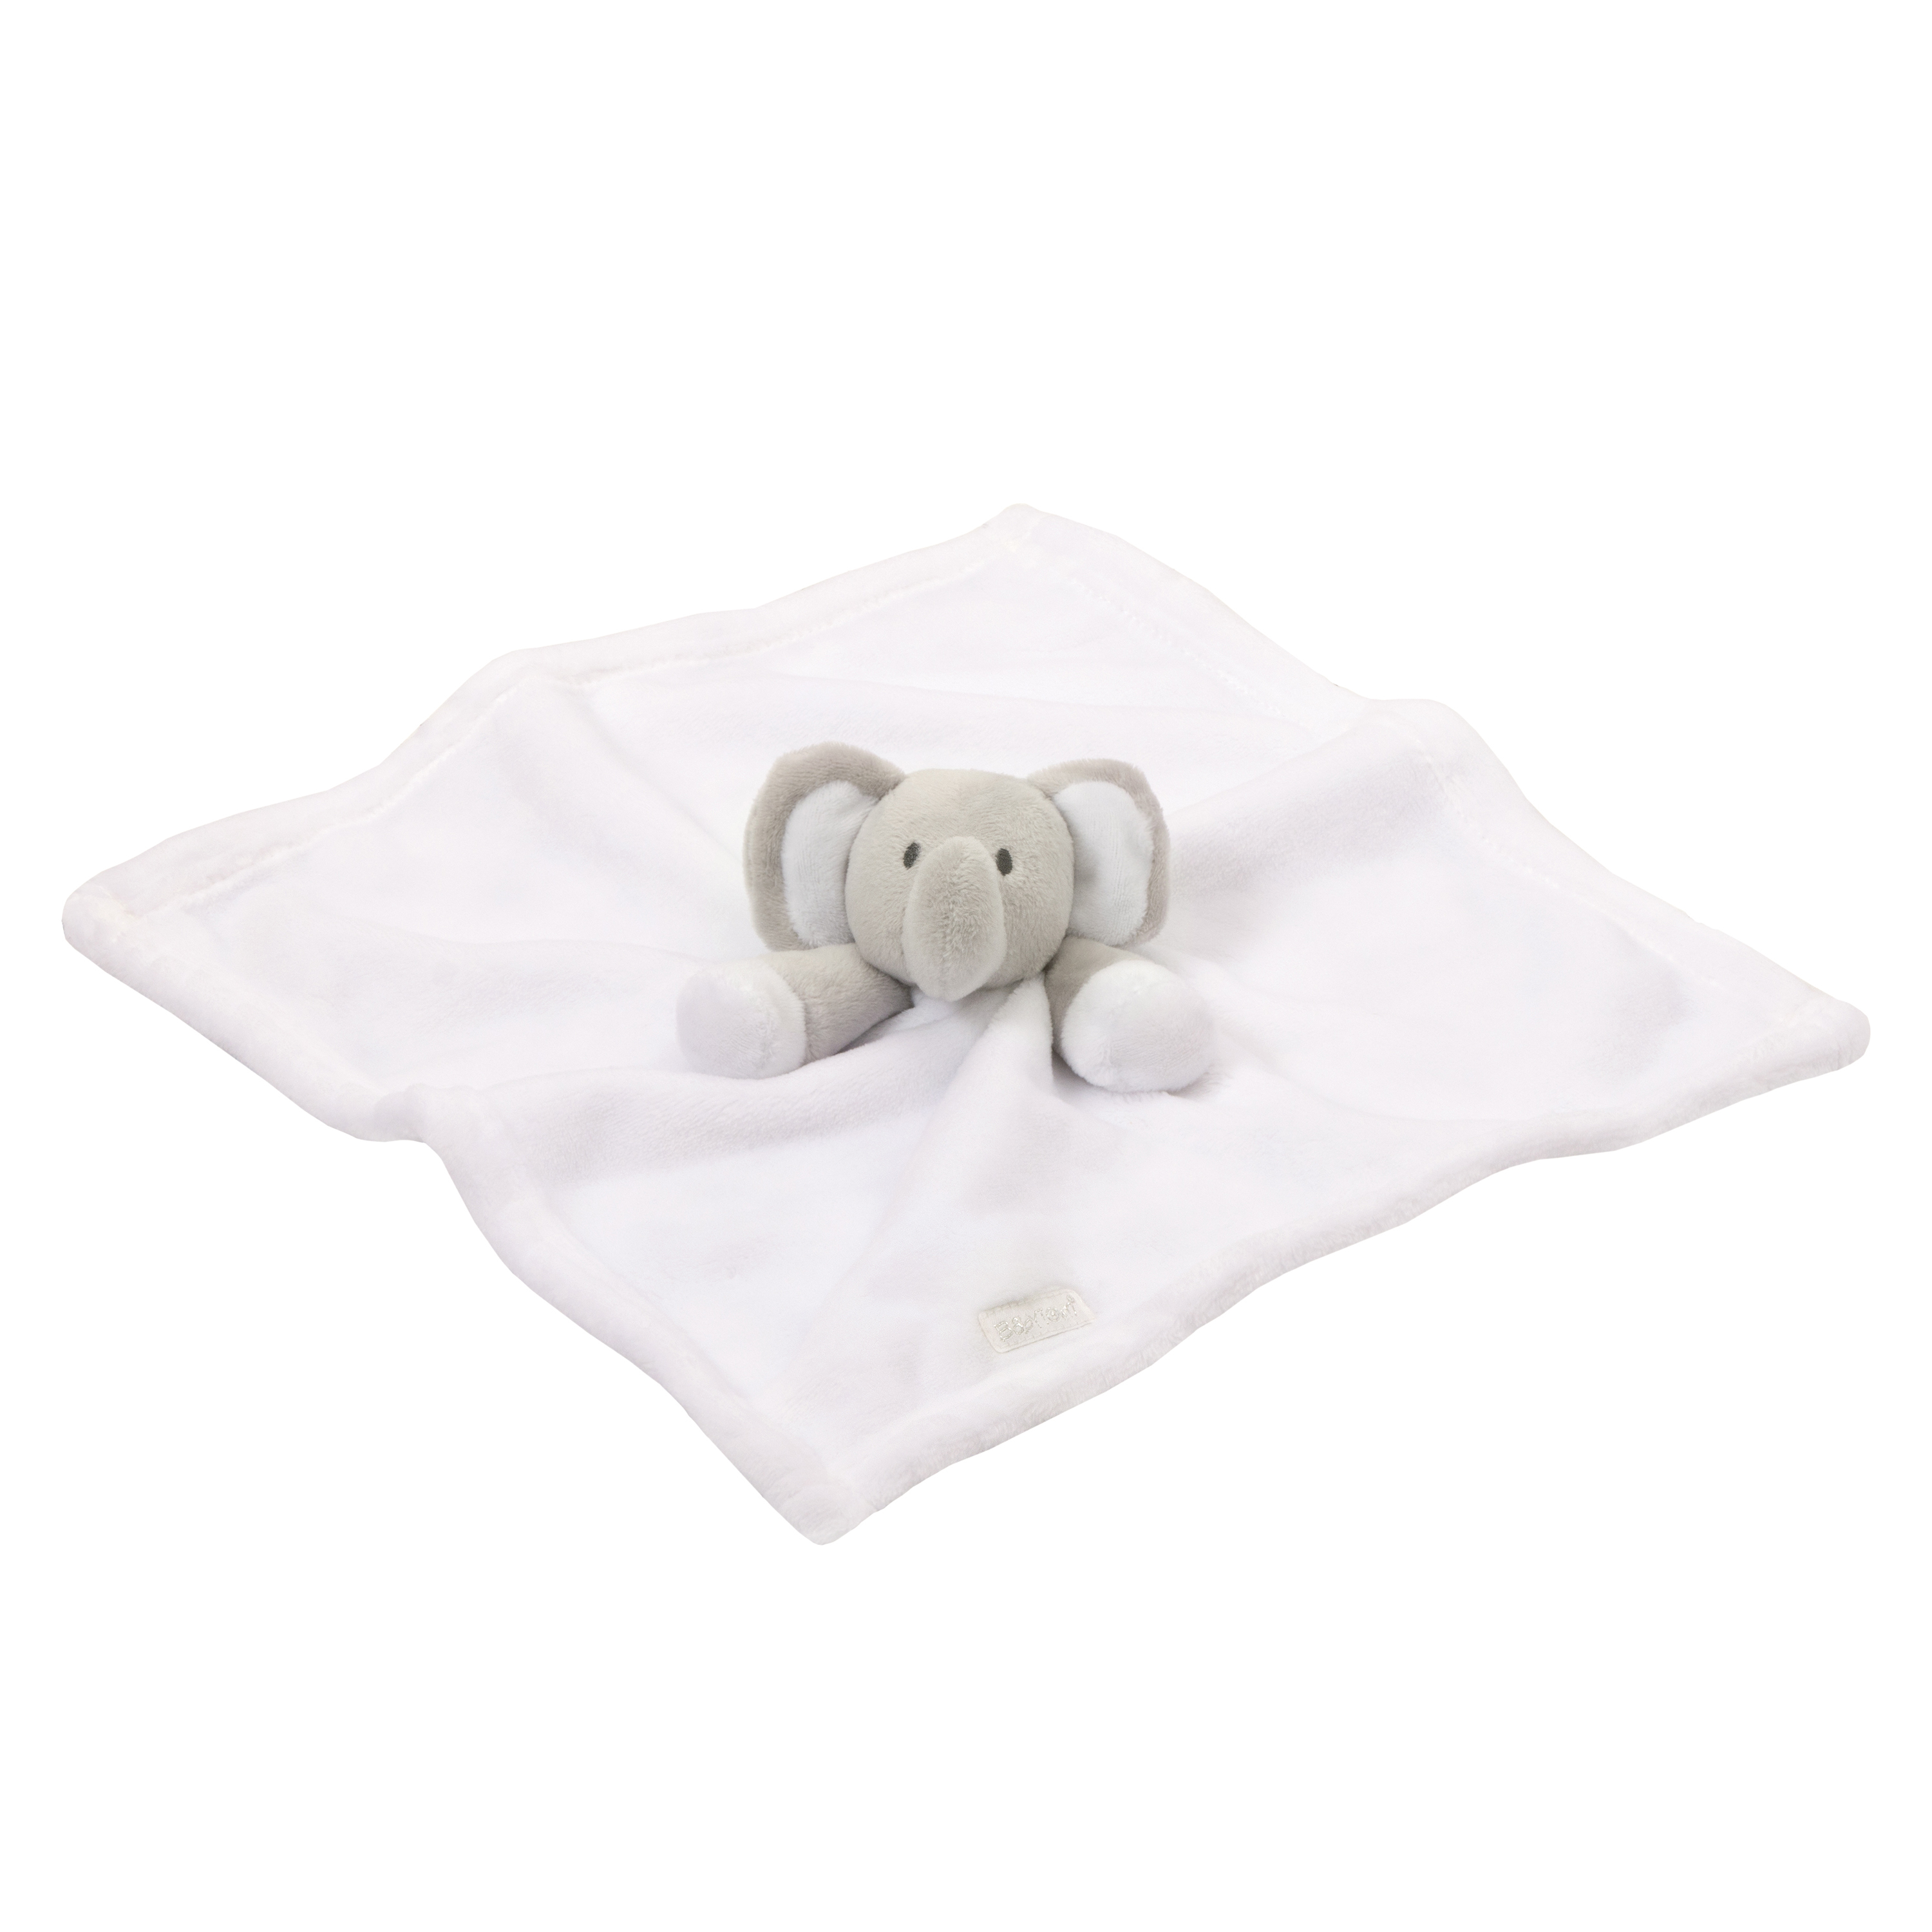 Luxury Soft Baby Cot Bed Blanket Warm Teddy Bear Designs Boys Girls Winters Gift 